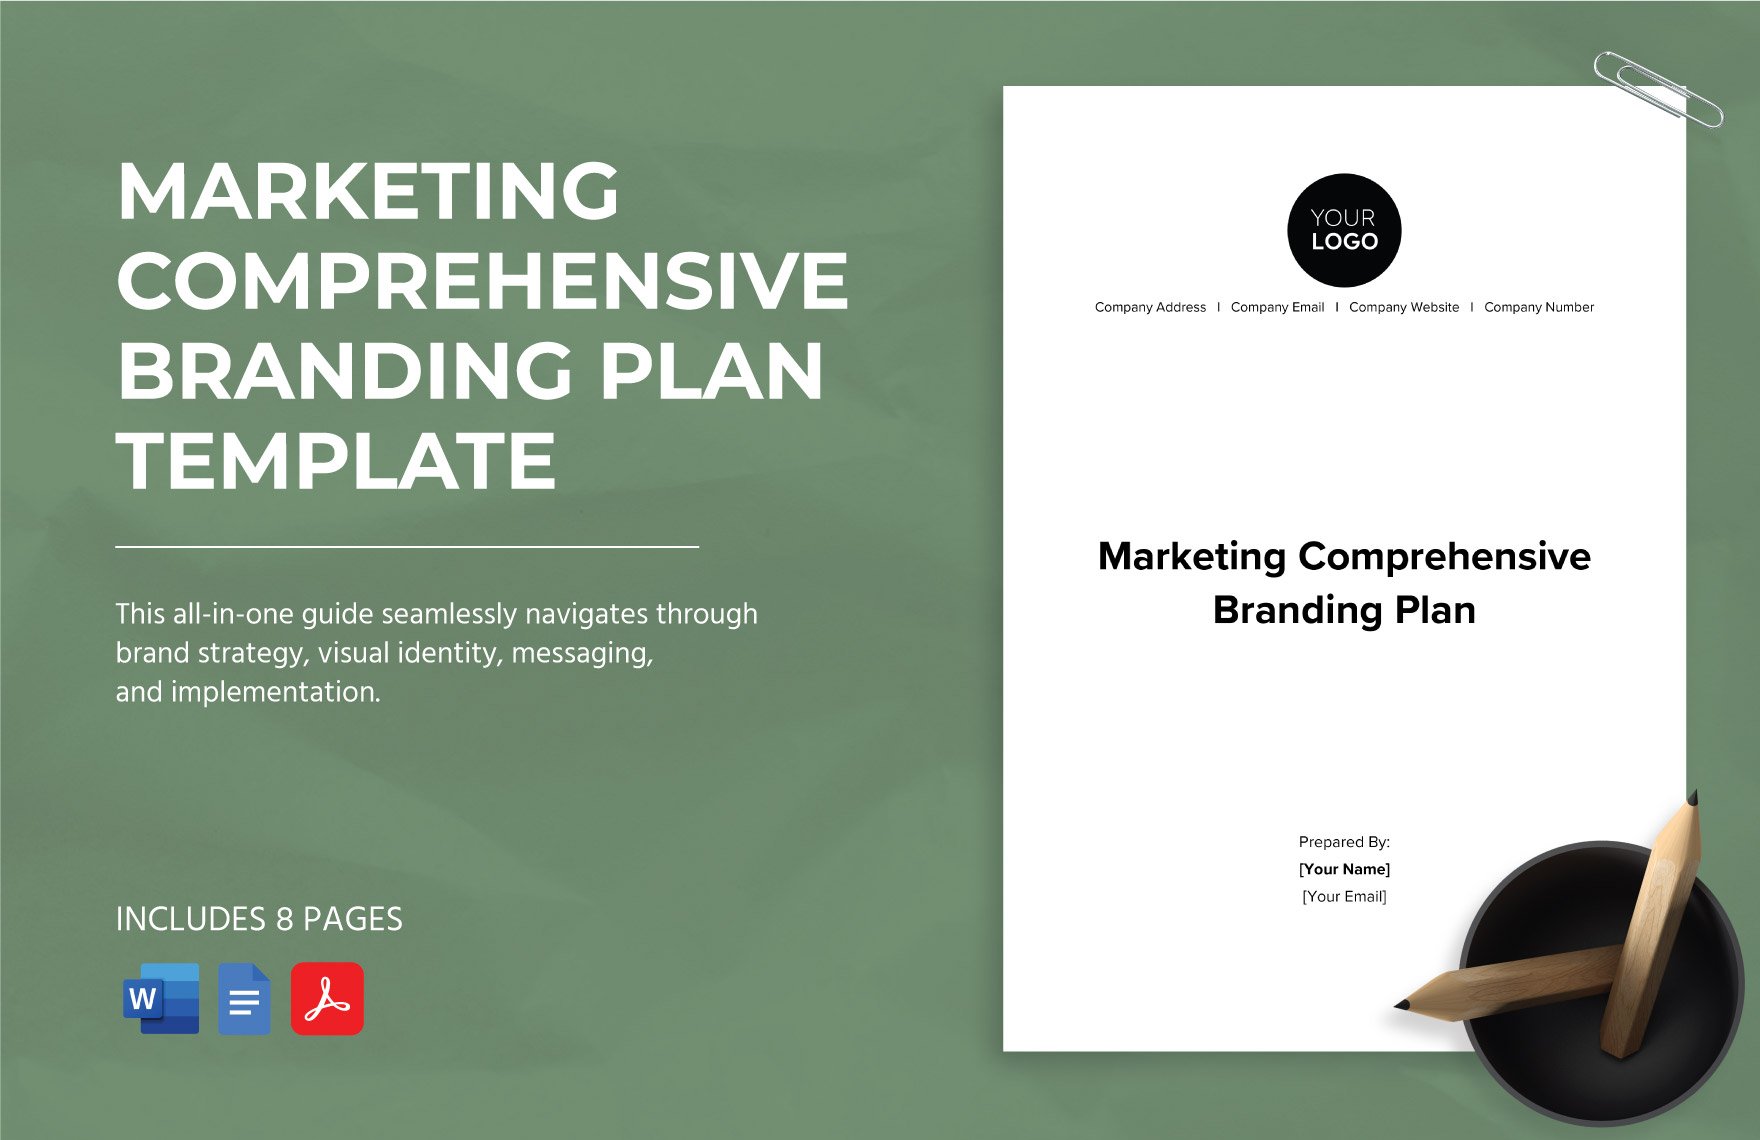 Marketing Comprehensive Branding Plan Template in Word, Google Docs, PDF